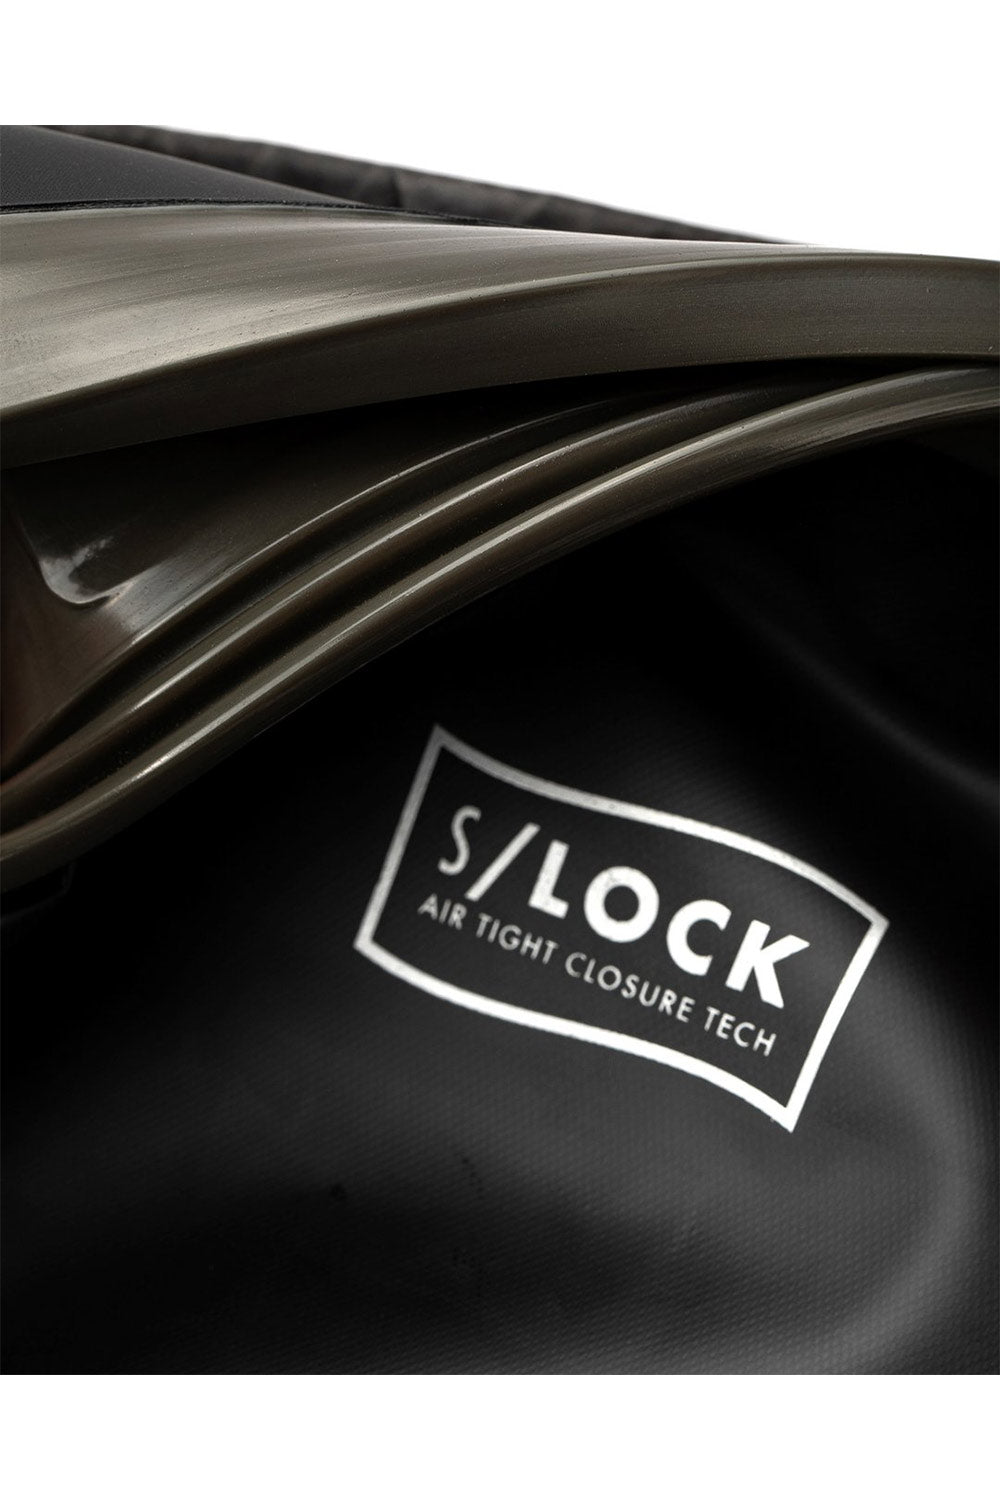 Creatures of Leisure S-Lock Dry Bag 35L - Black